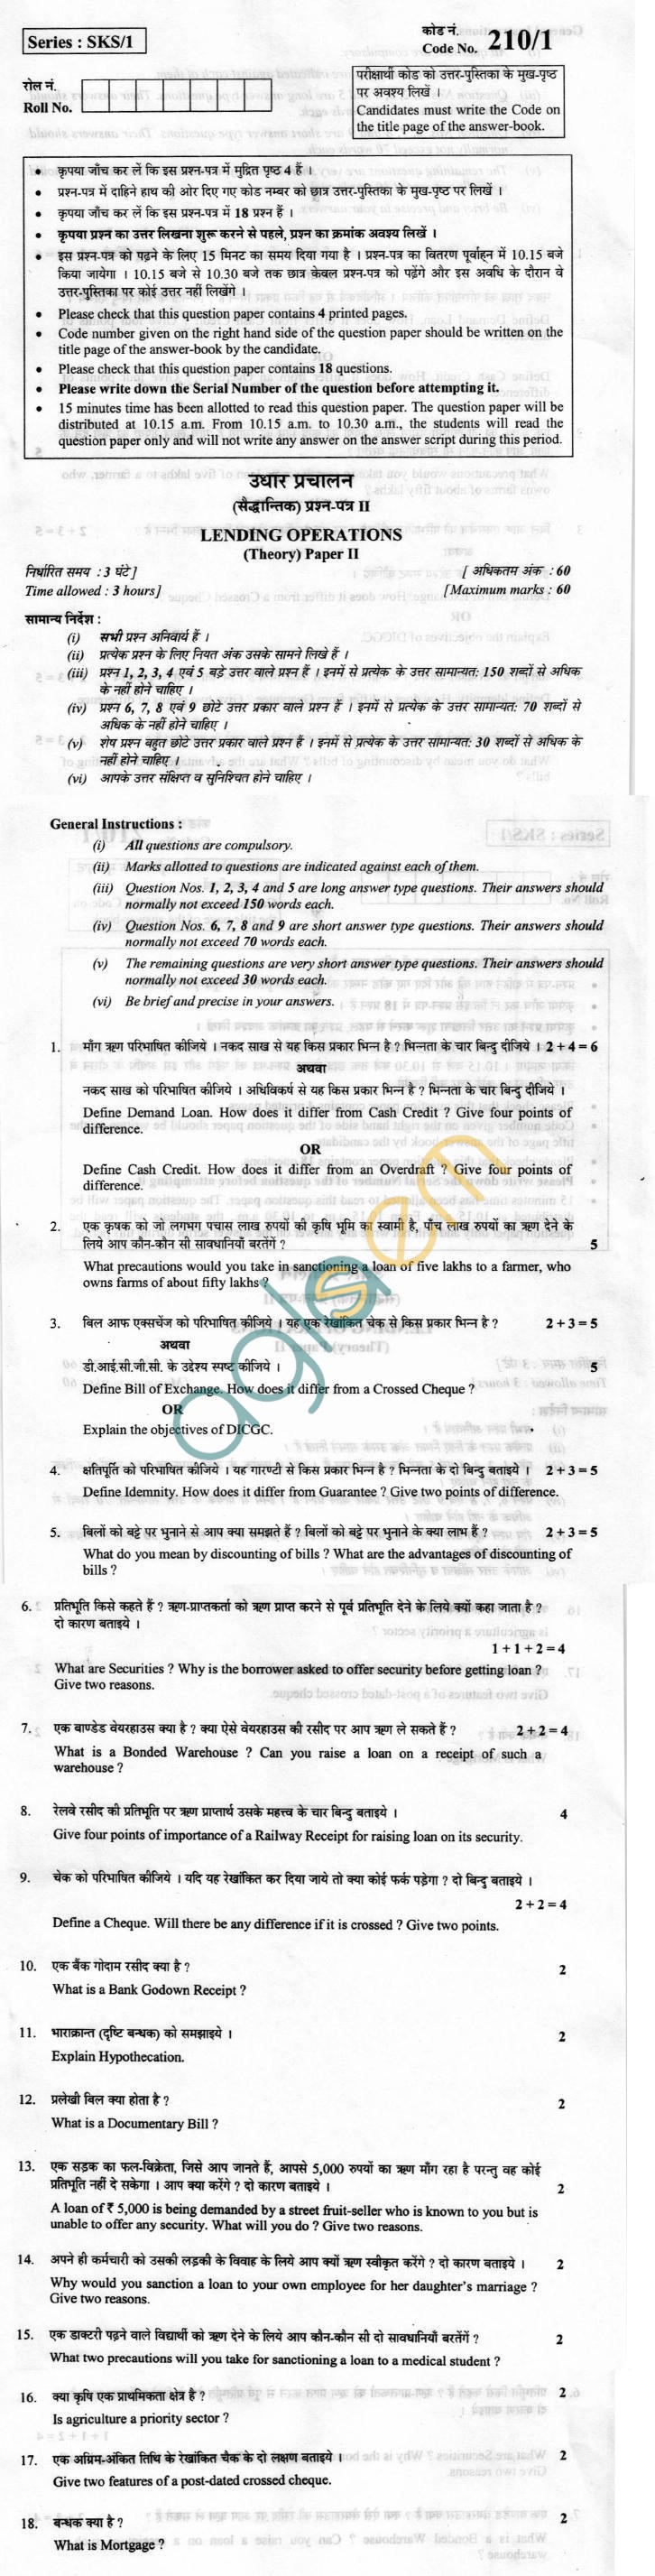 CBSE Board Exam 2013 Class XII Question Paper - Lending Operations Paper II